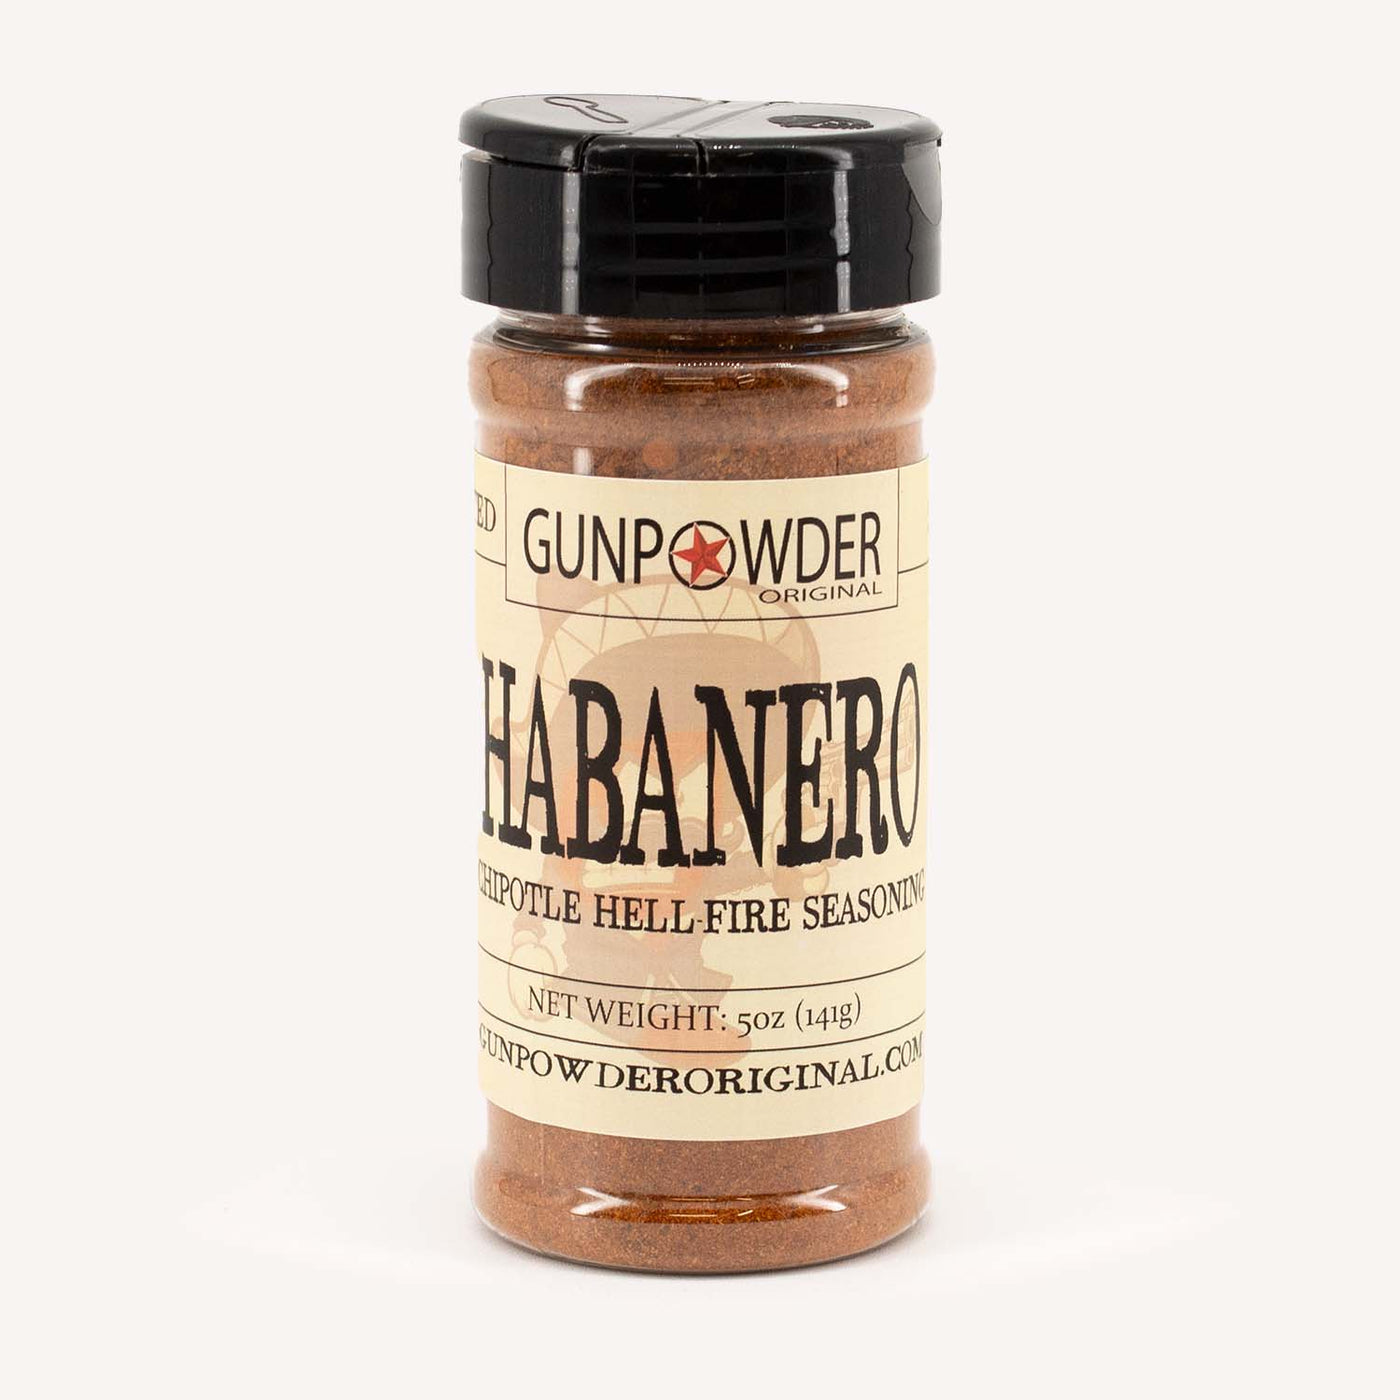 Gunpowder Original Habanero Chipotle Hell-Fire Seasoning